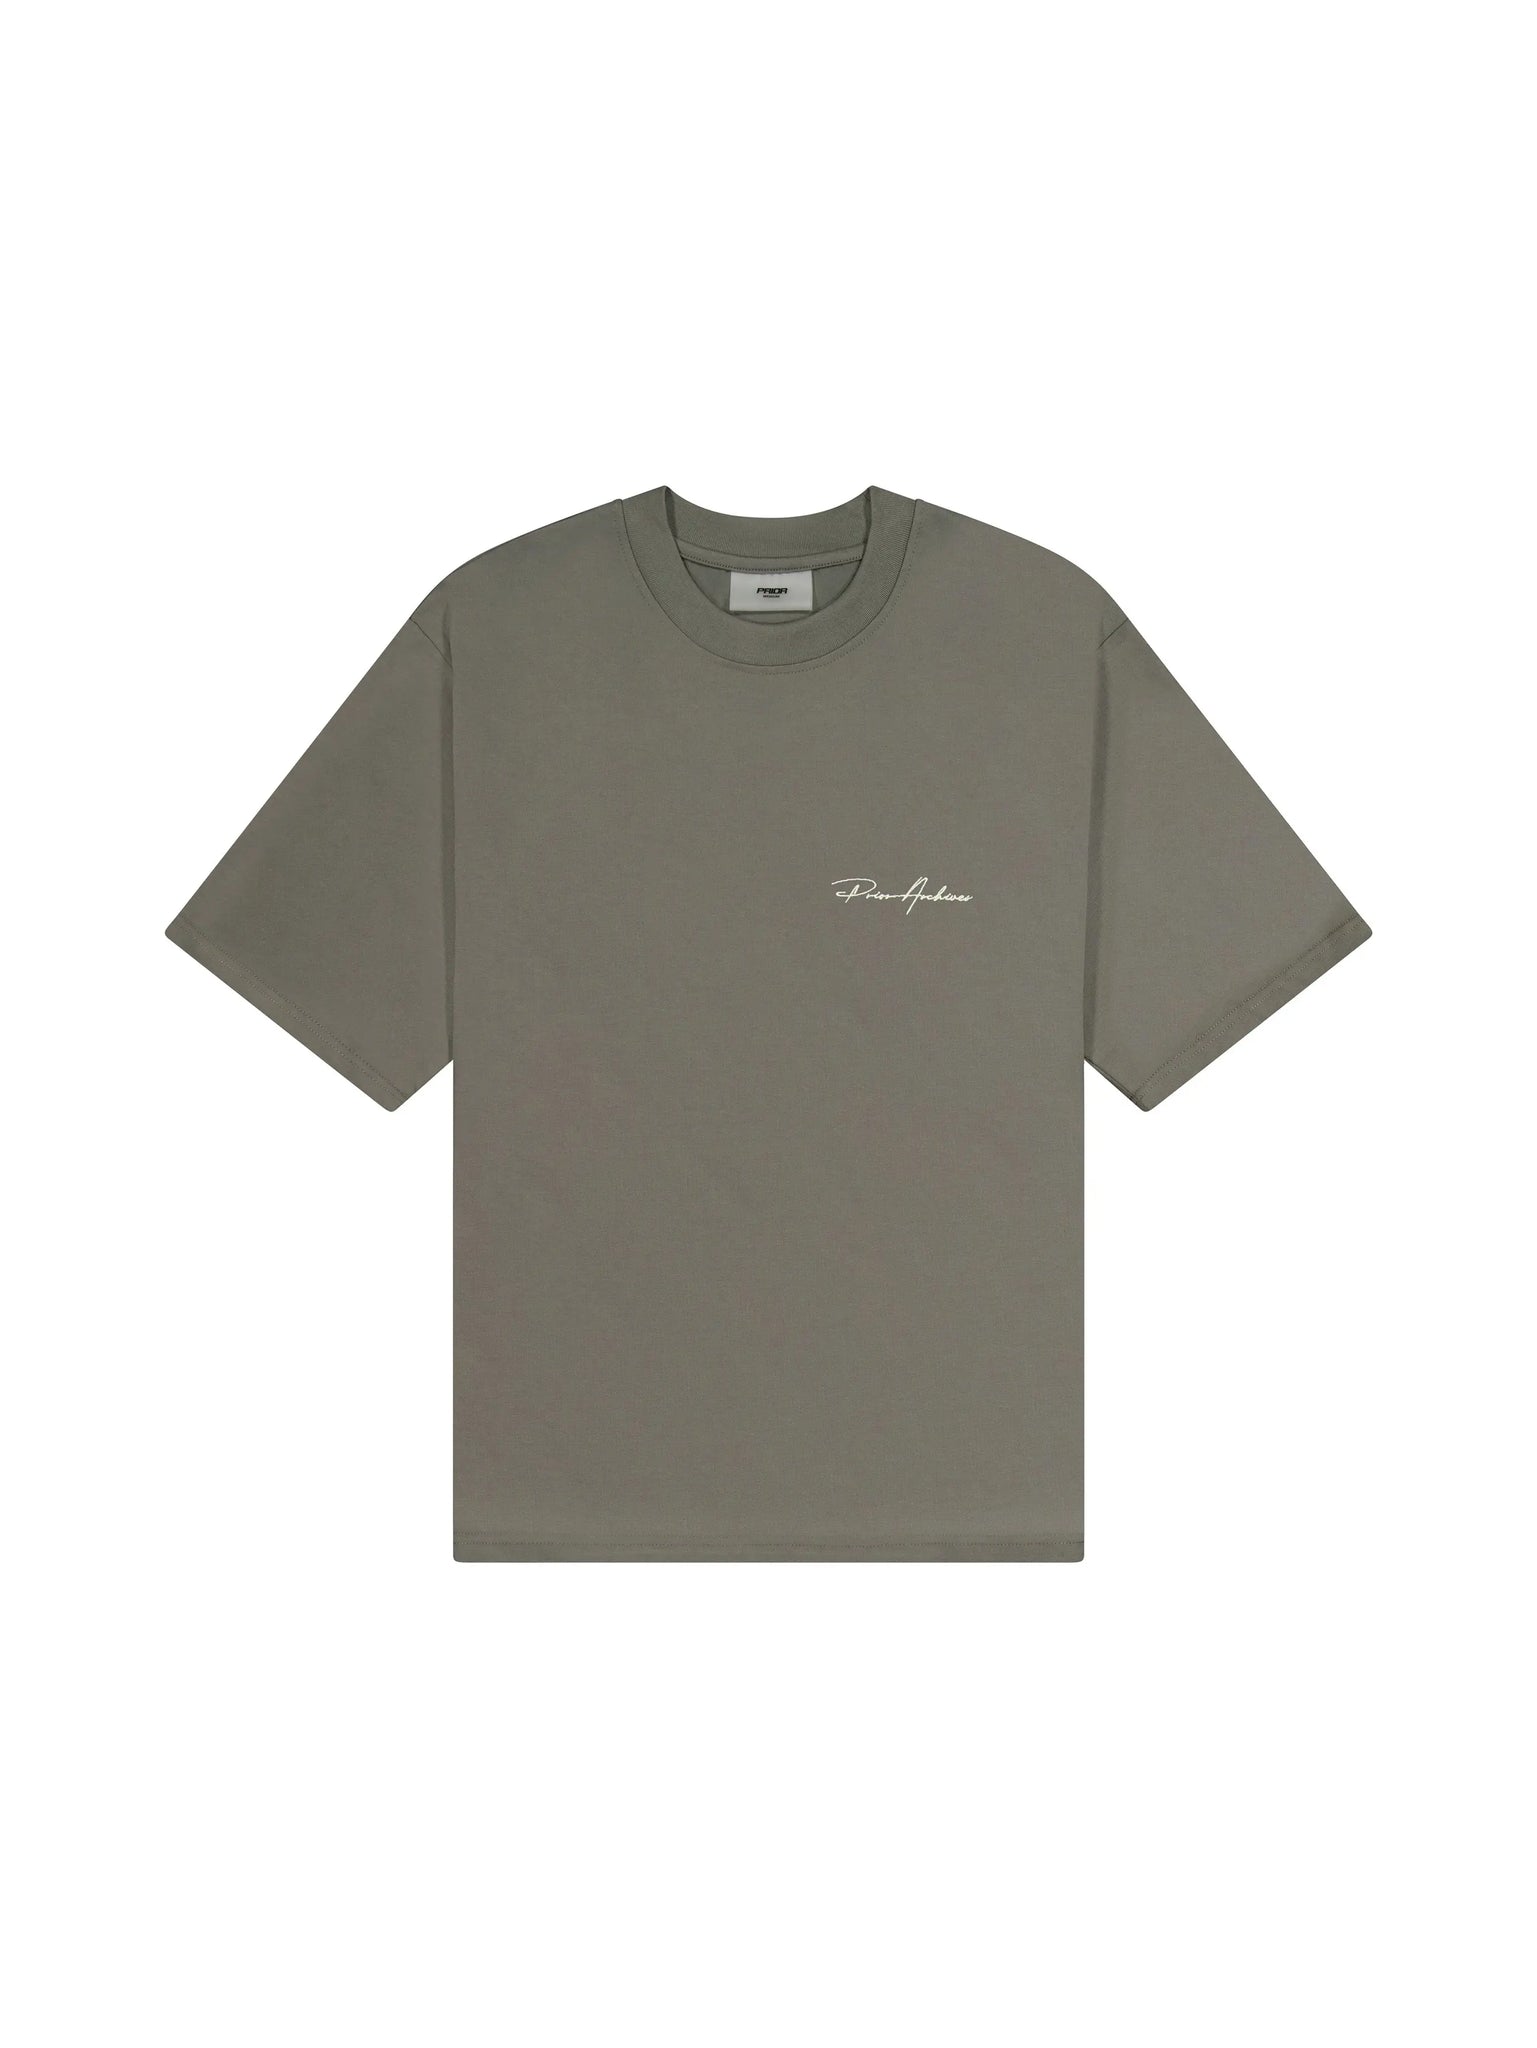 Prior Embroidery Logo Oversized T-shirt Medium Olive in Melbourne, Australia - Prior